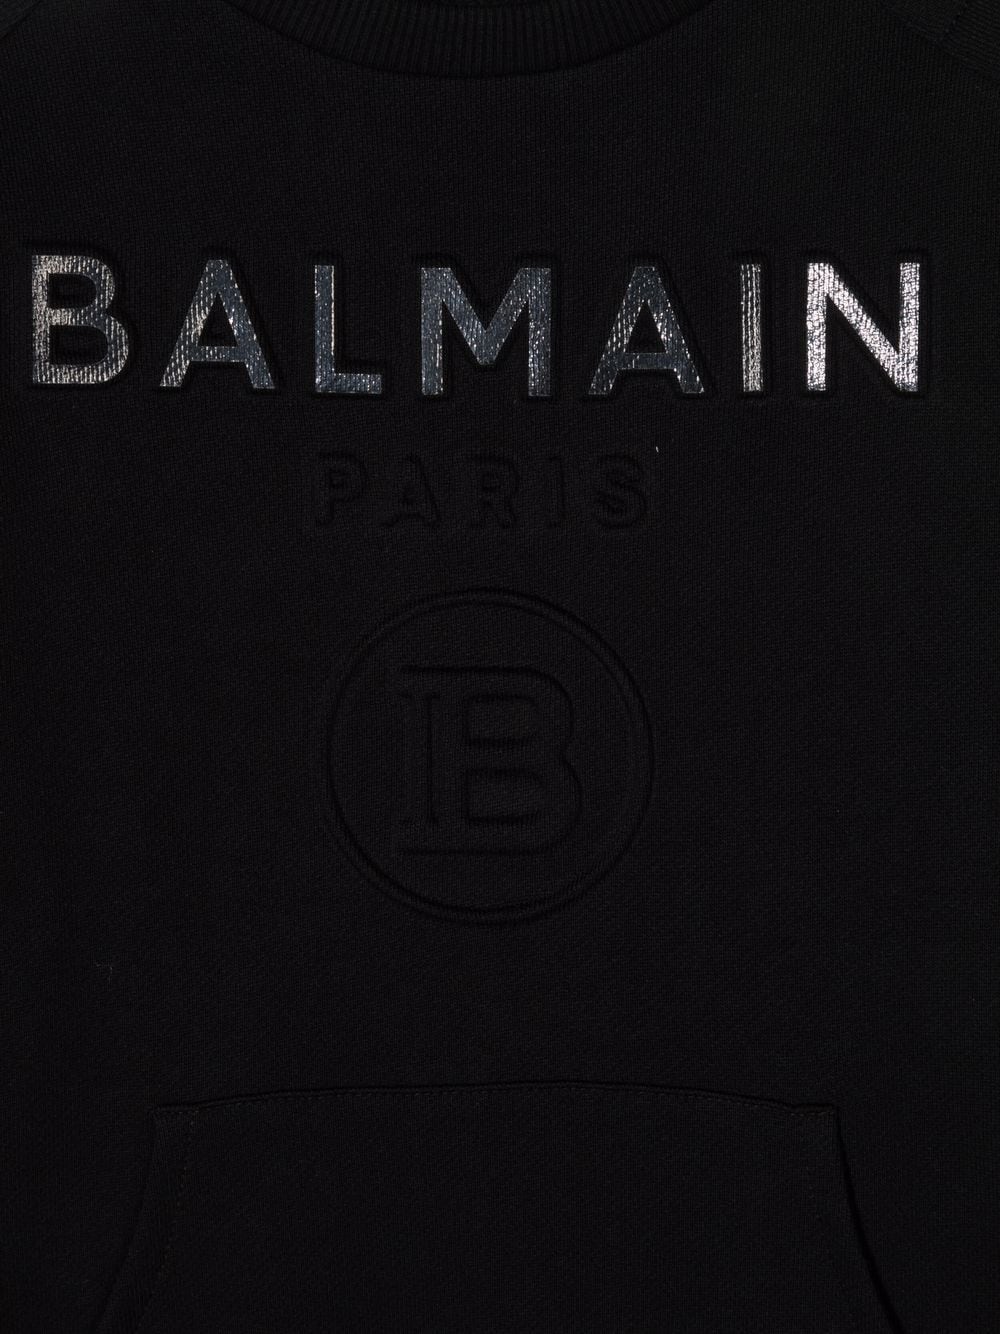 BALMAIN KIDS Logo-embossed cotton sweatshirt Black - MAISONDEFASHION.COM